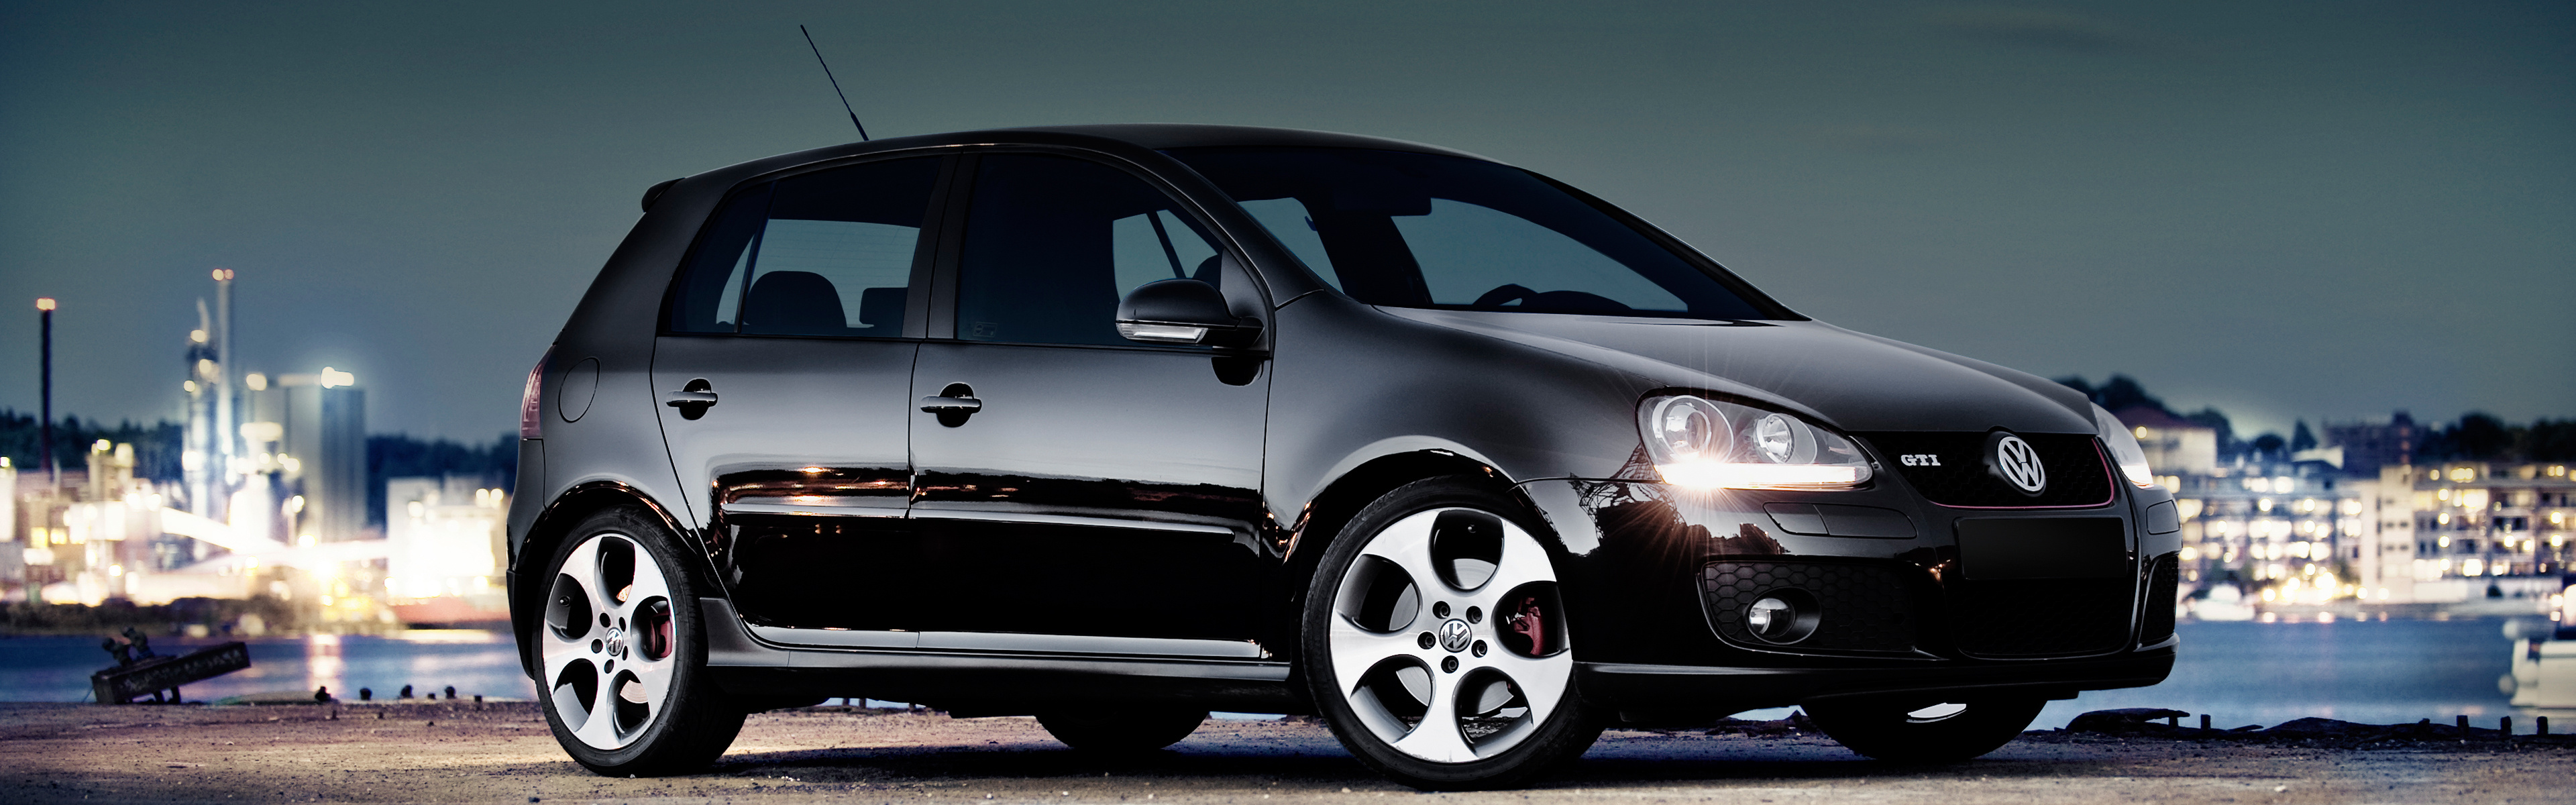 Volkswagen Golf V GTI, Dualscreen beauty, Autumn scenery, Breathtaking backgrounds, 3840x1200 Dual Screen Desktop